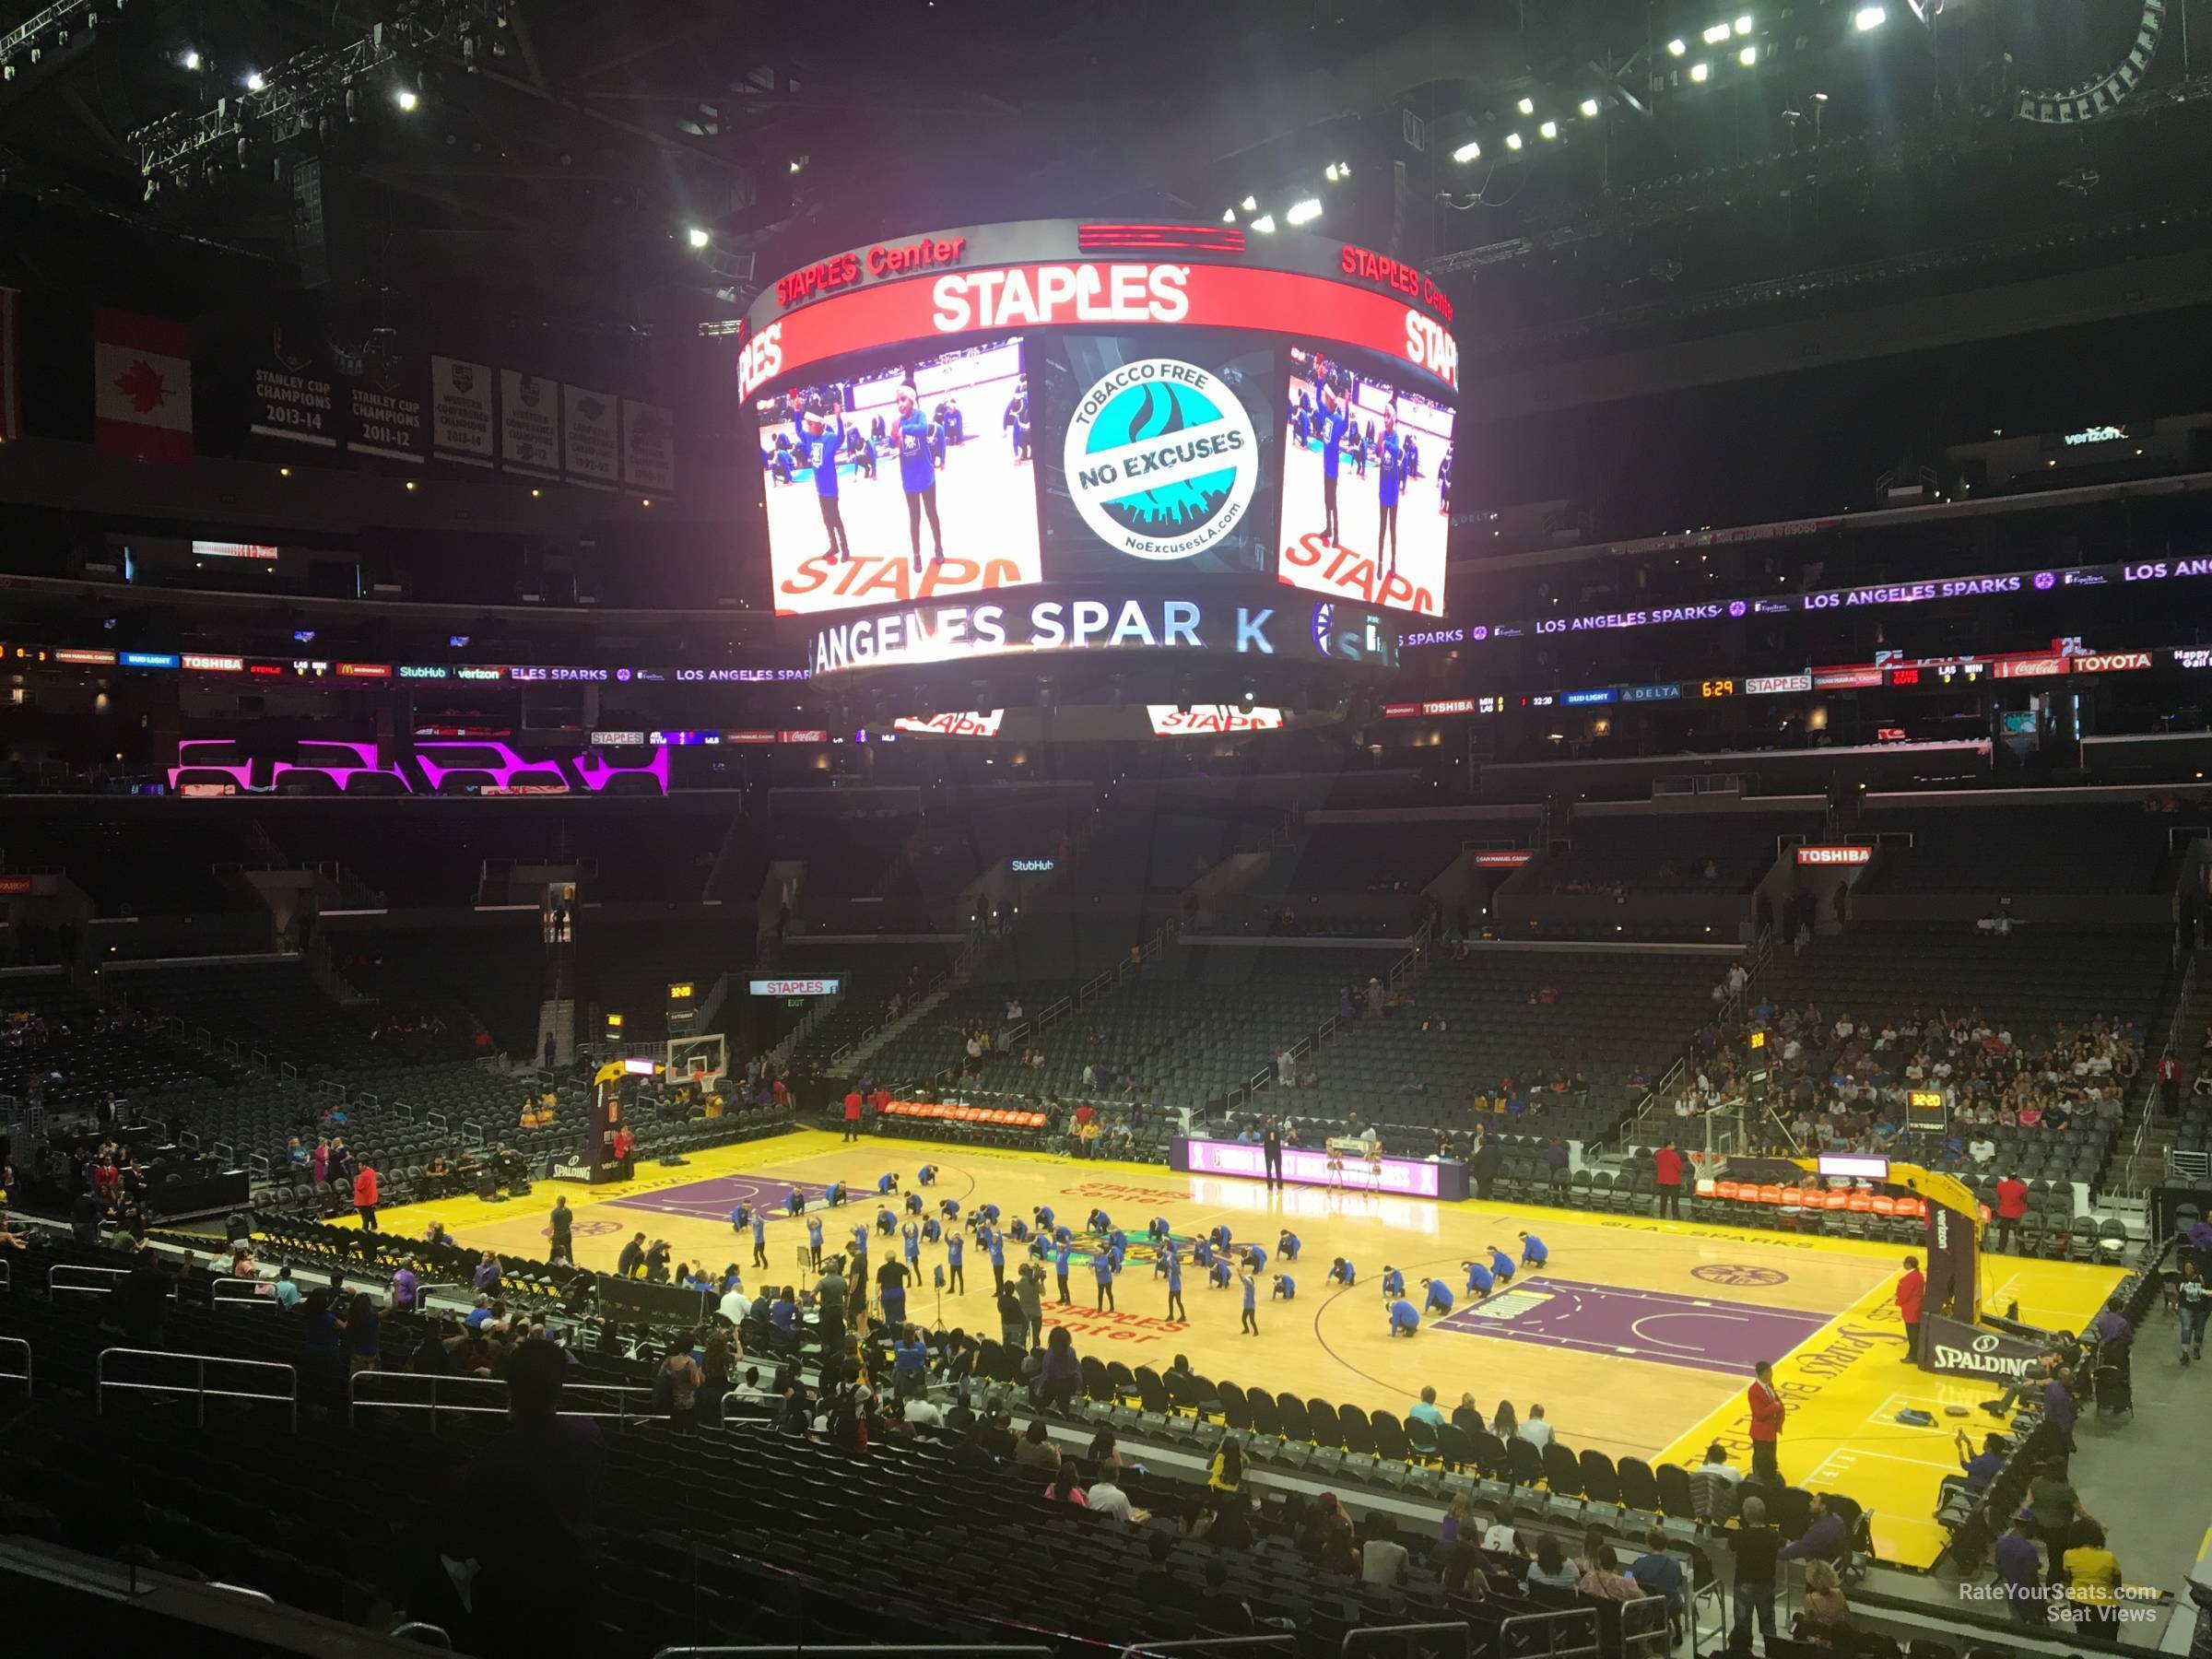 Staples Center Premier 12 - Clippers/Lakers - RateYourSeats.com